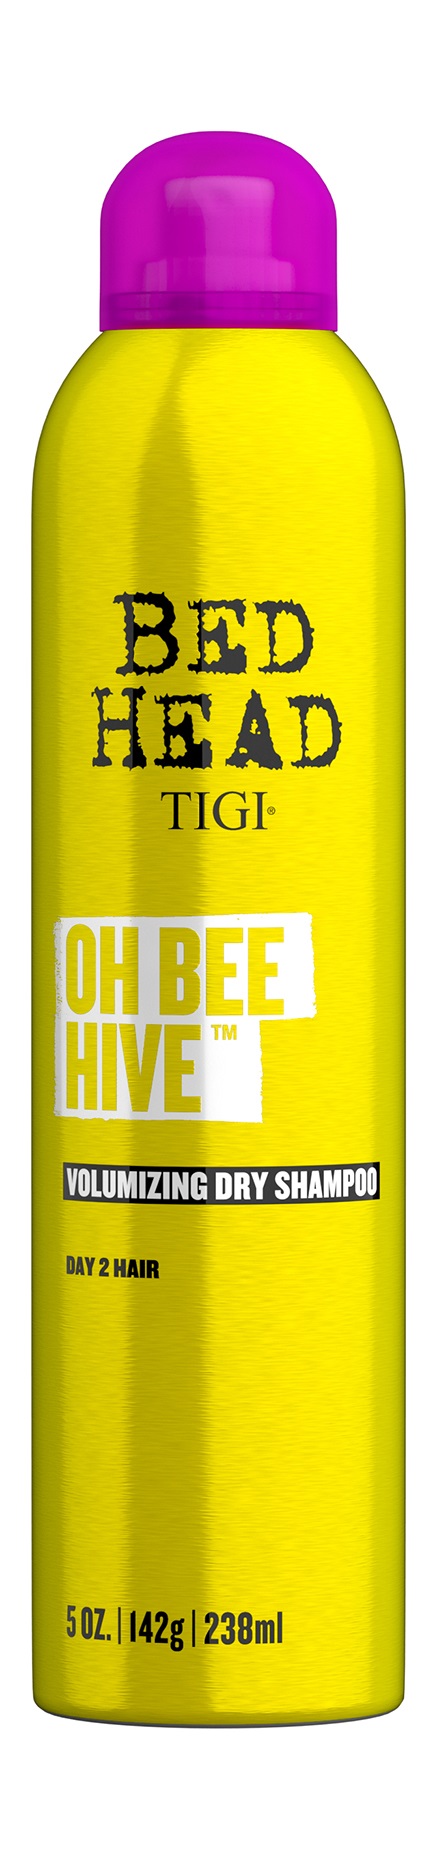 Tigi Bed Head Oh Bee Hive Volumizing Dry Shampoo купить в Ялте